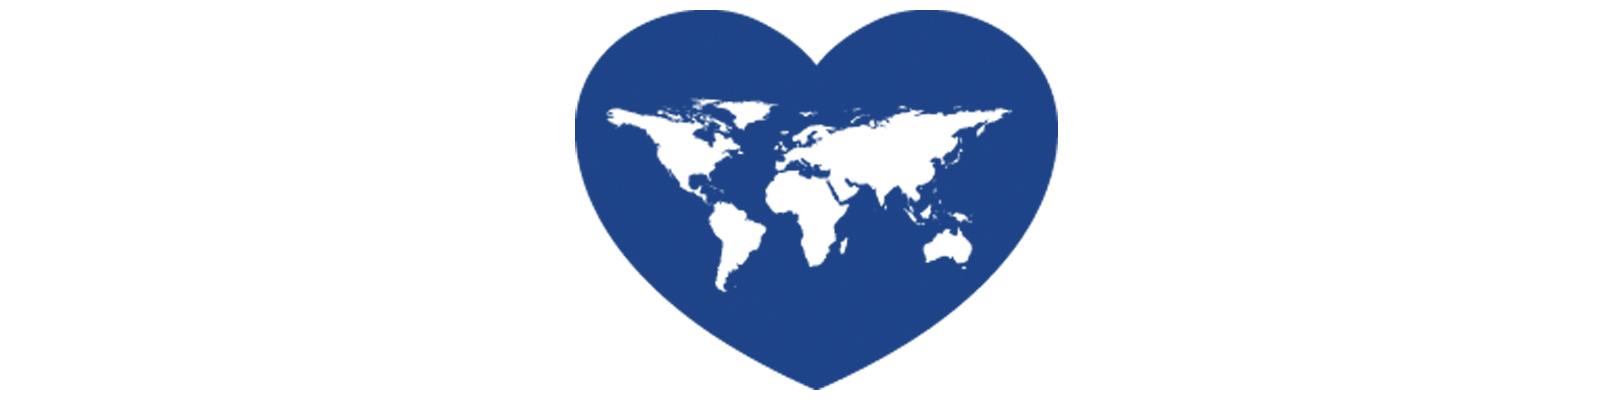 Heartland Medical Logo Image